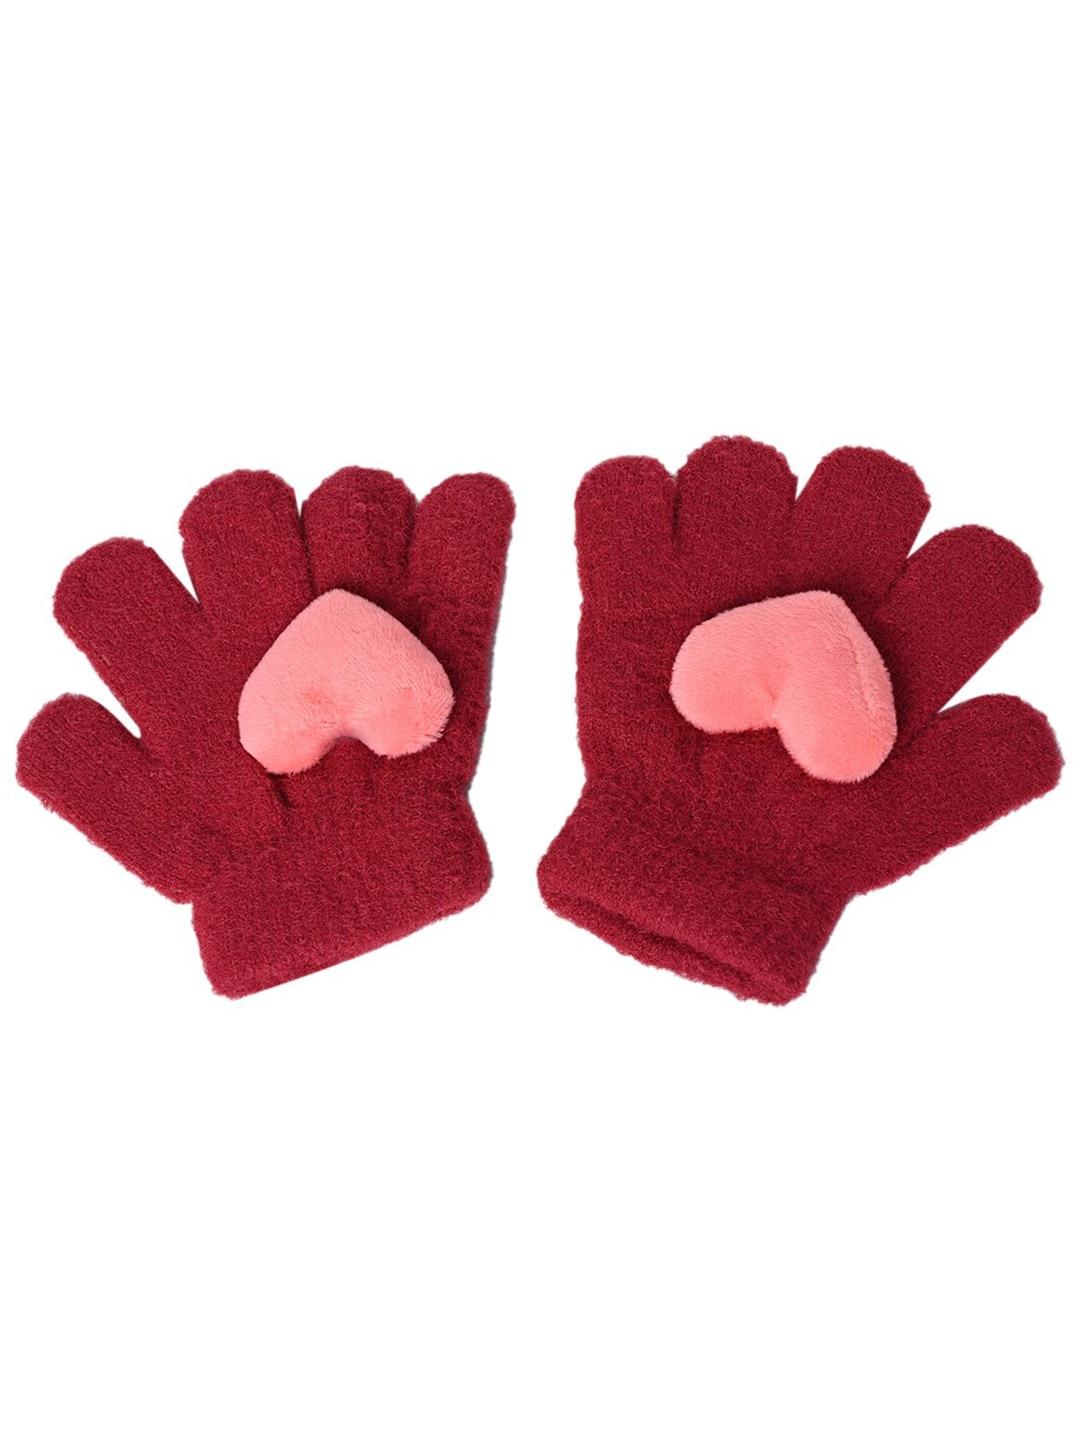 kid-o-world-girls-patterned-wool-snug-fit-mittens